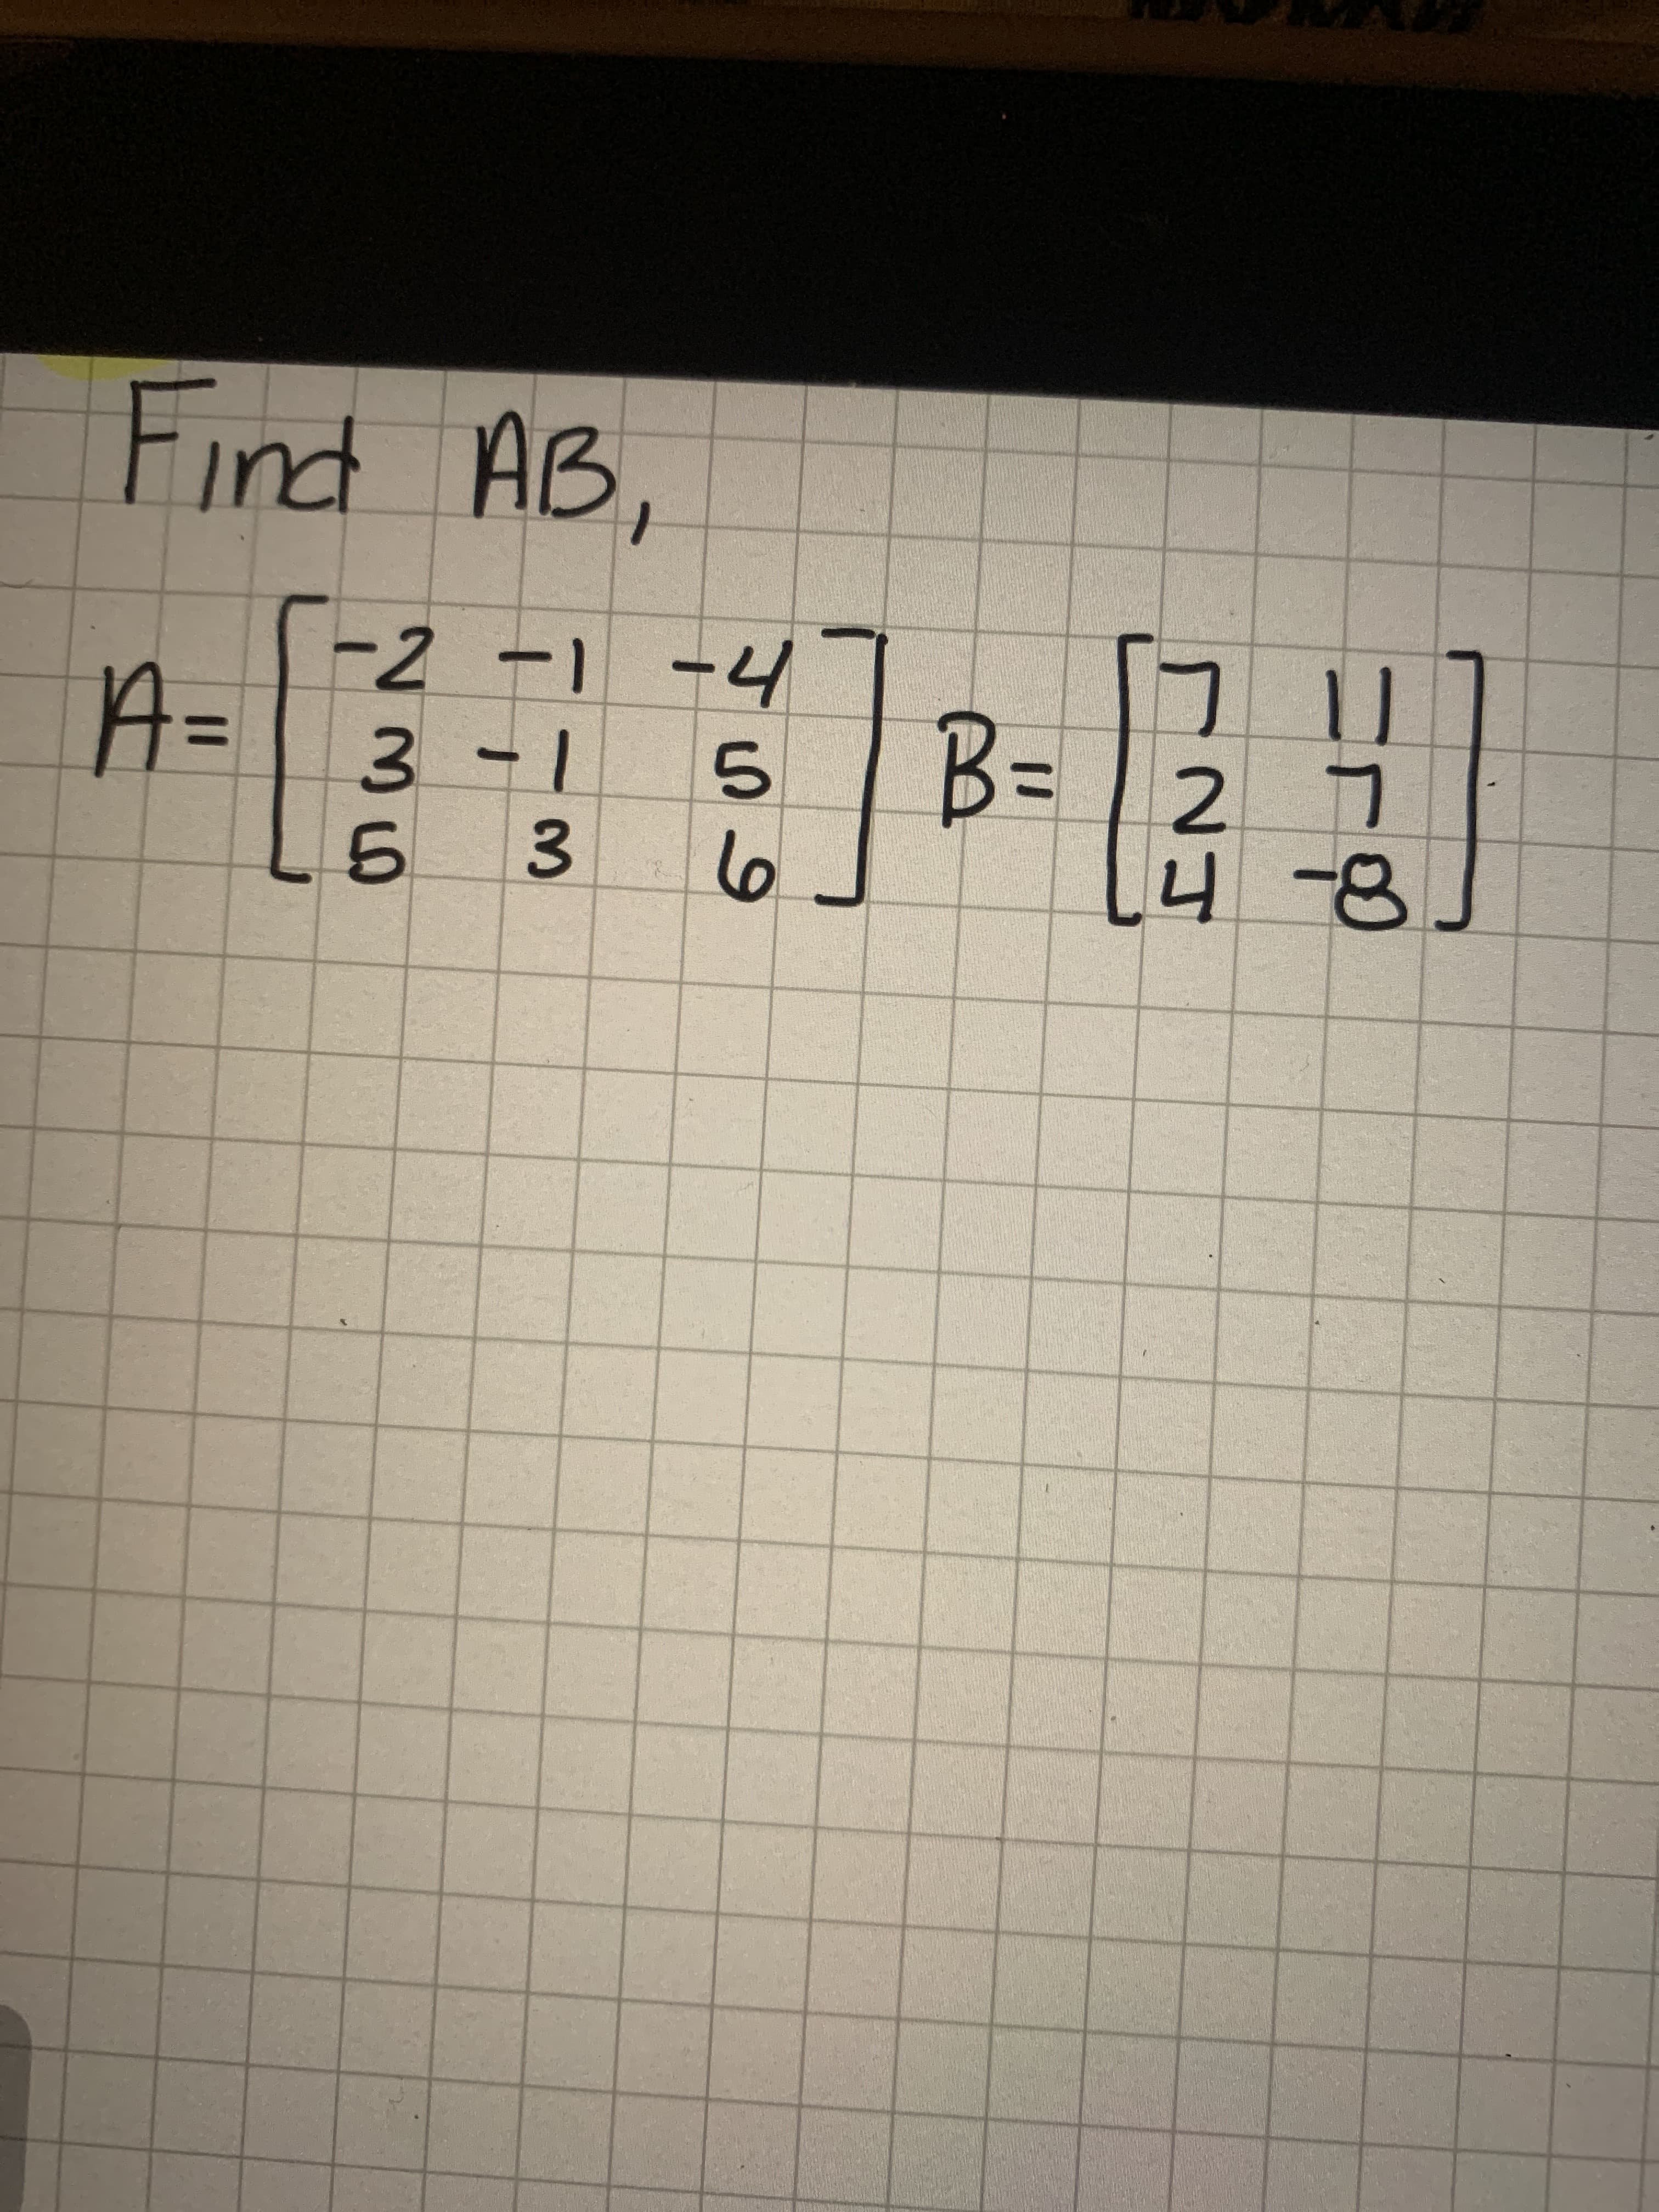 Find AB,
-2 -1 -4
A=3 -1
B=
%3D
%3D
2 7
6 3
6
4-8
